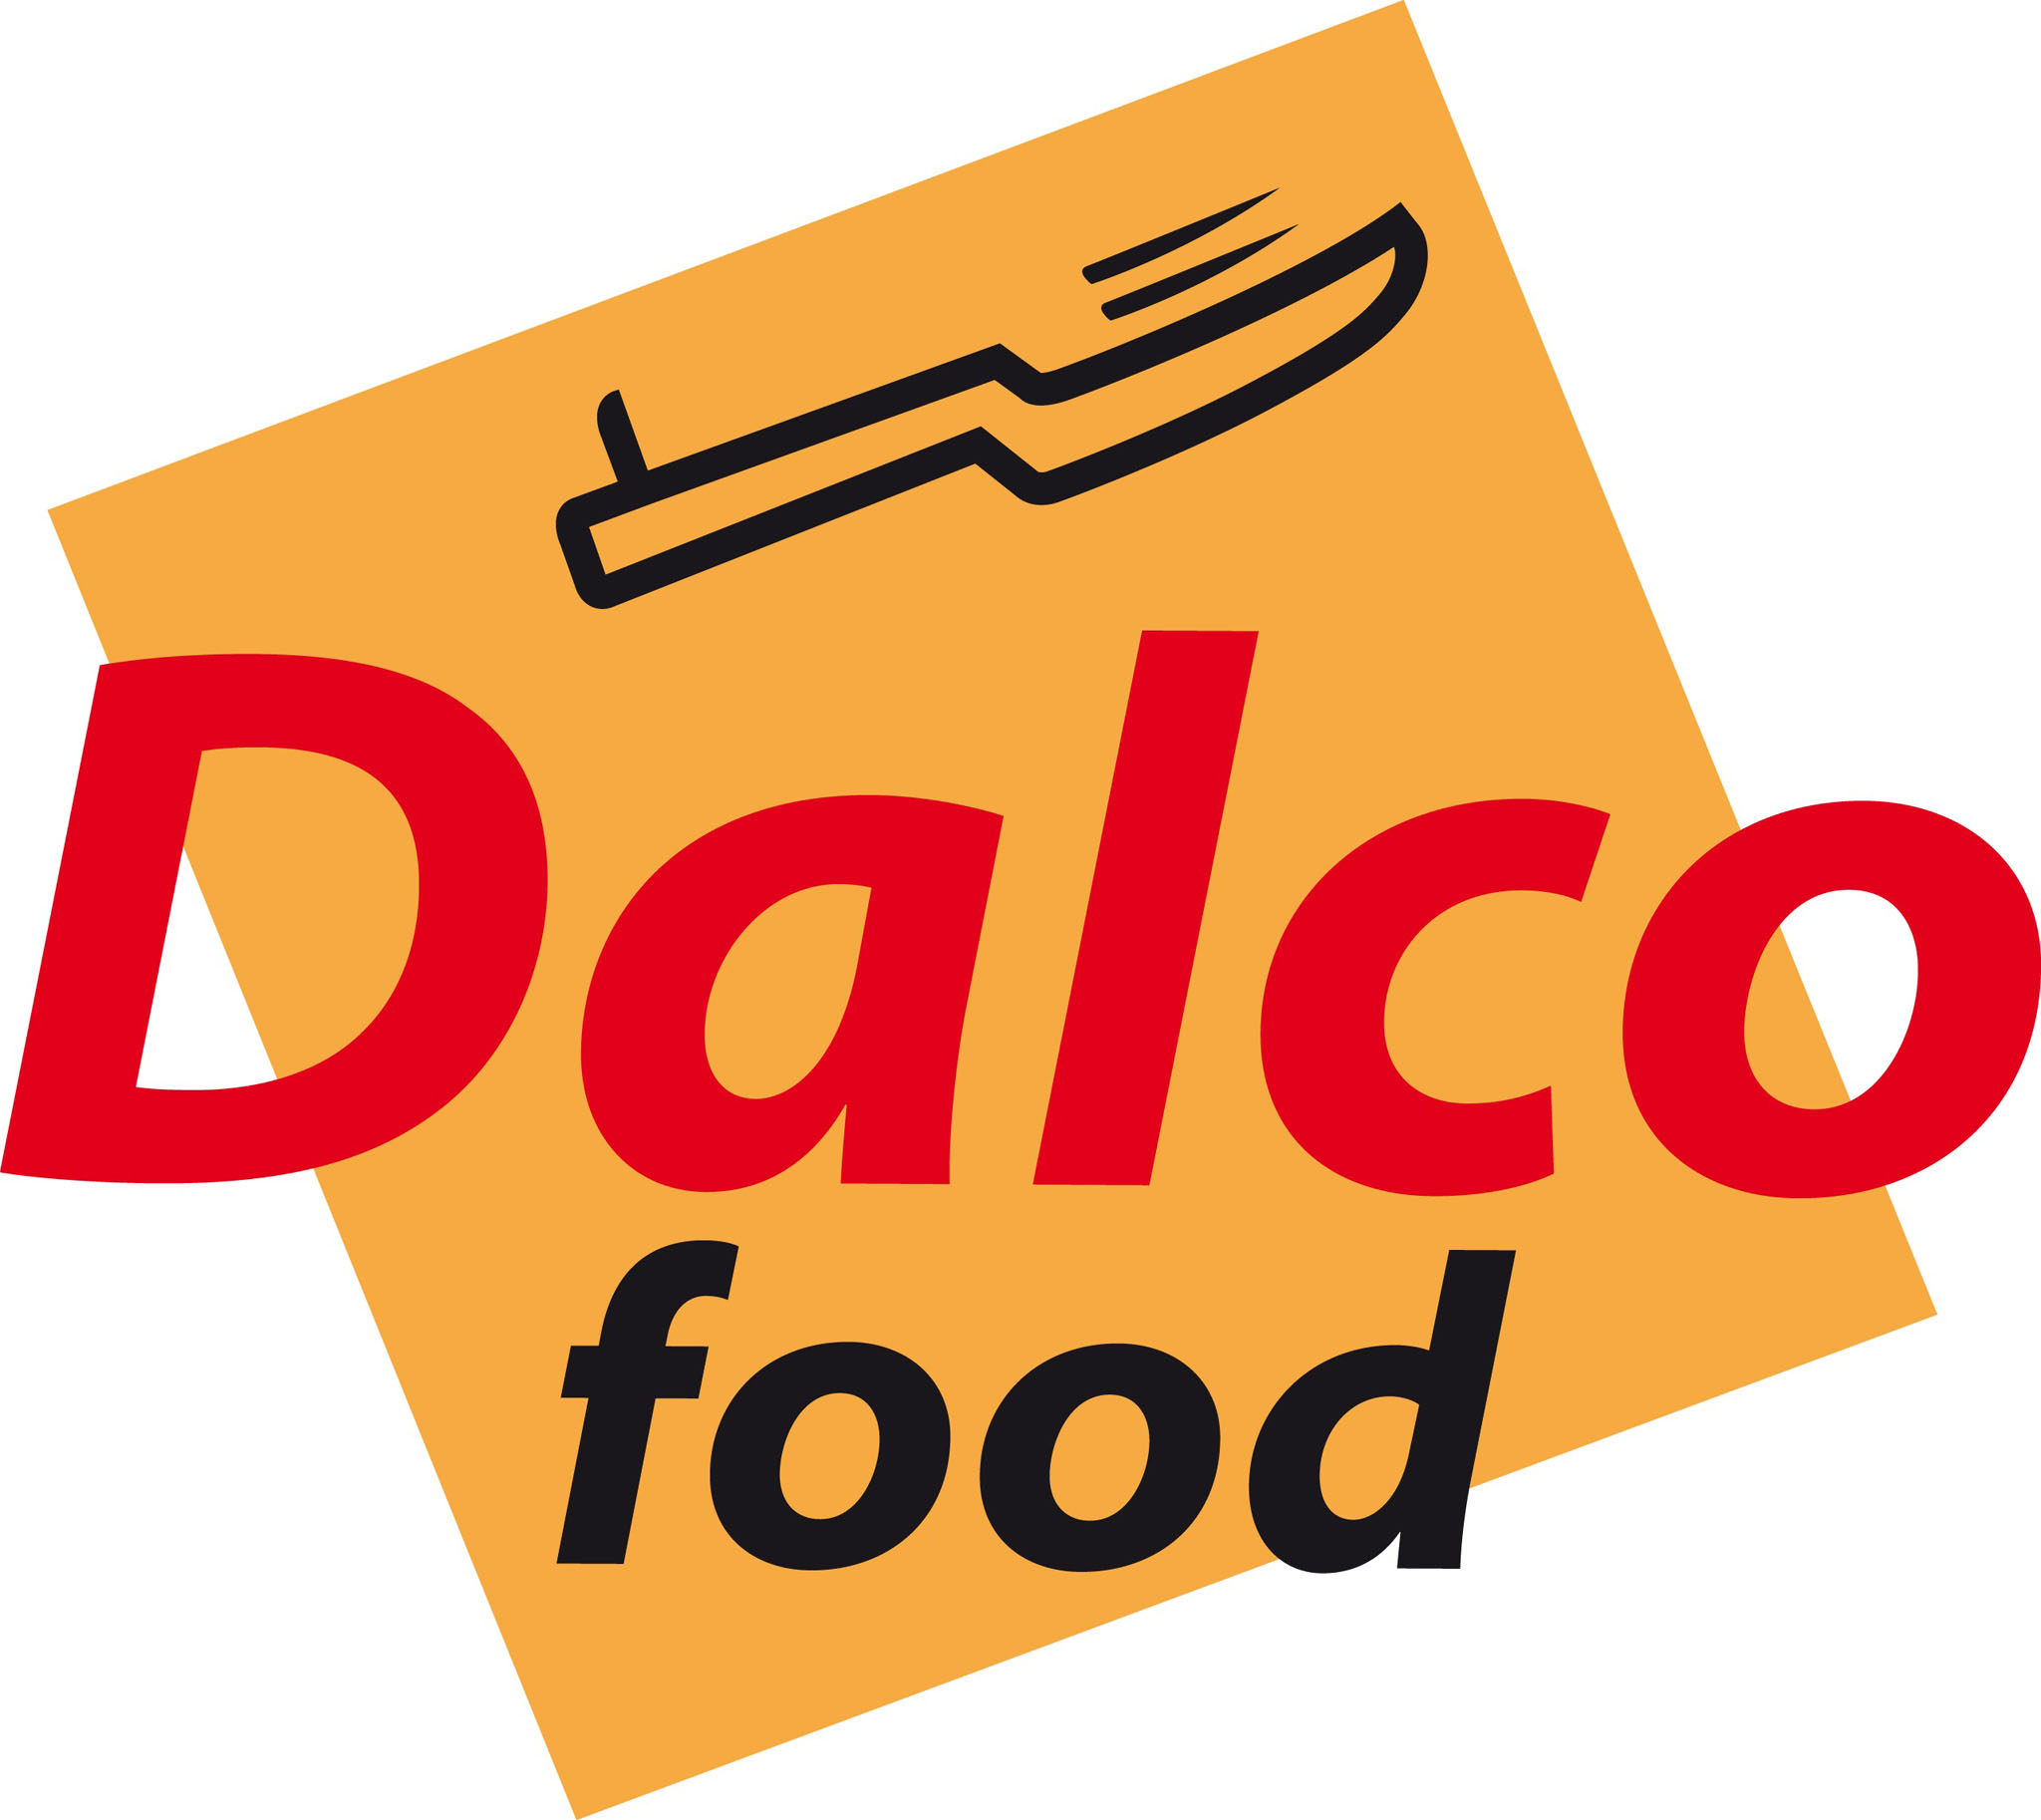 Dalco Food